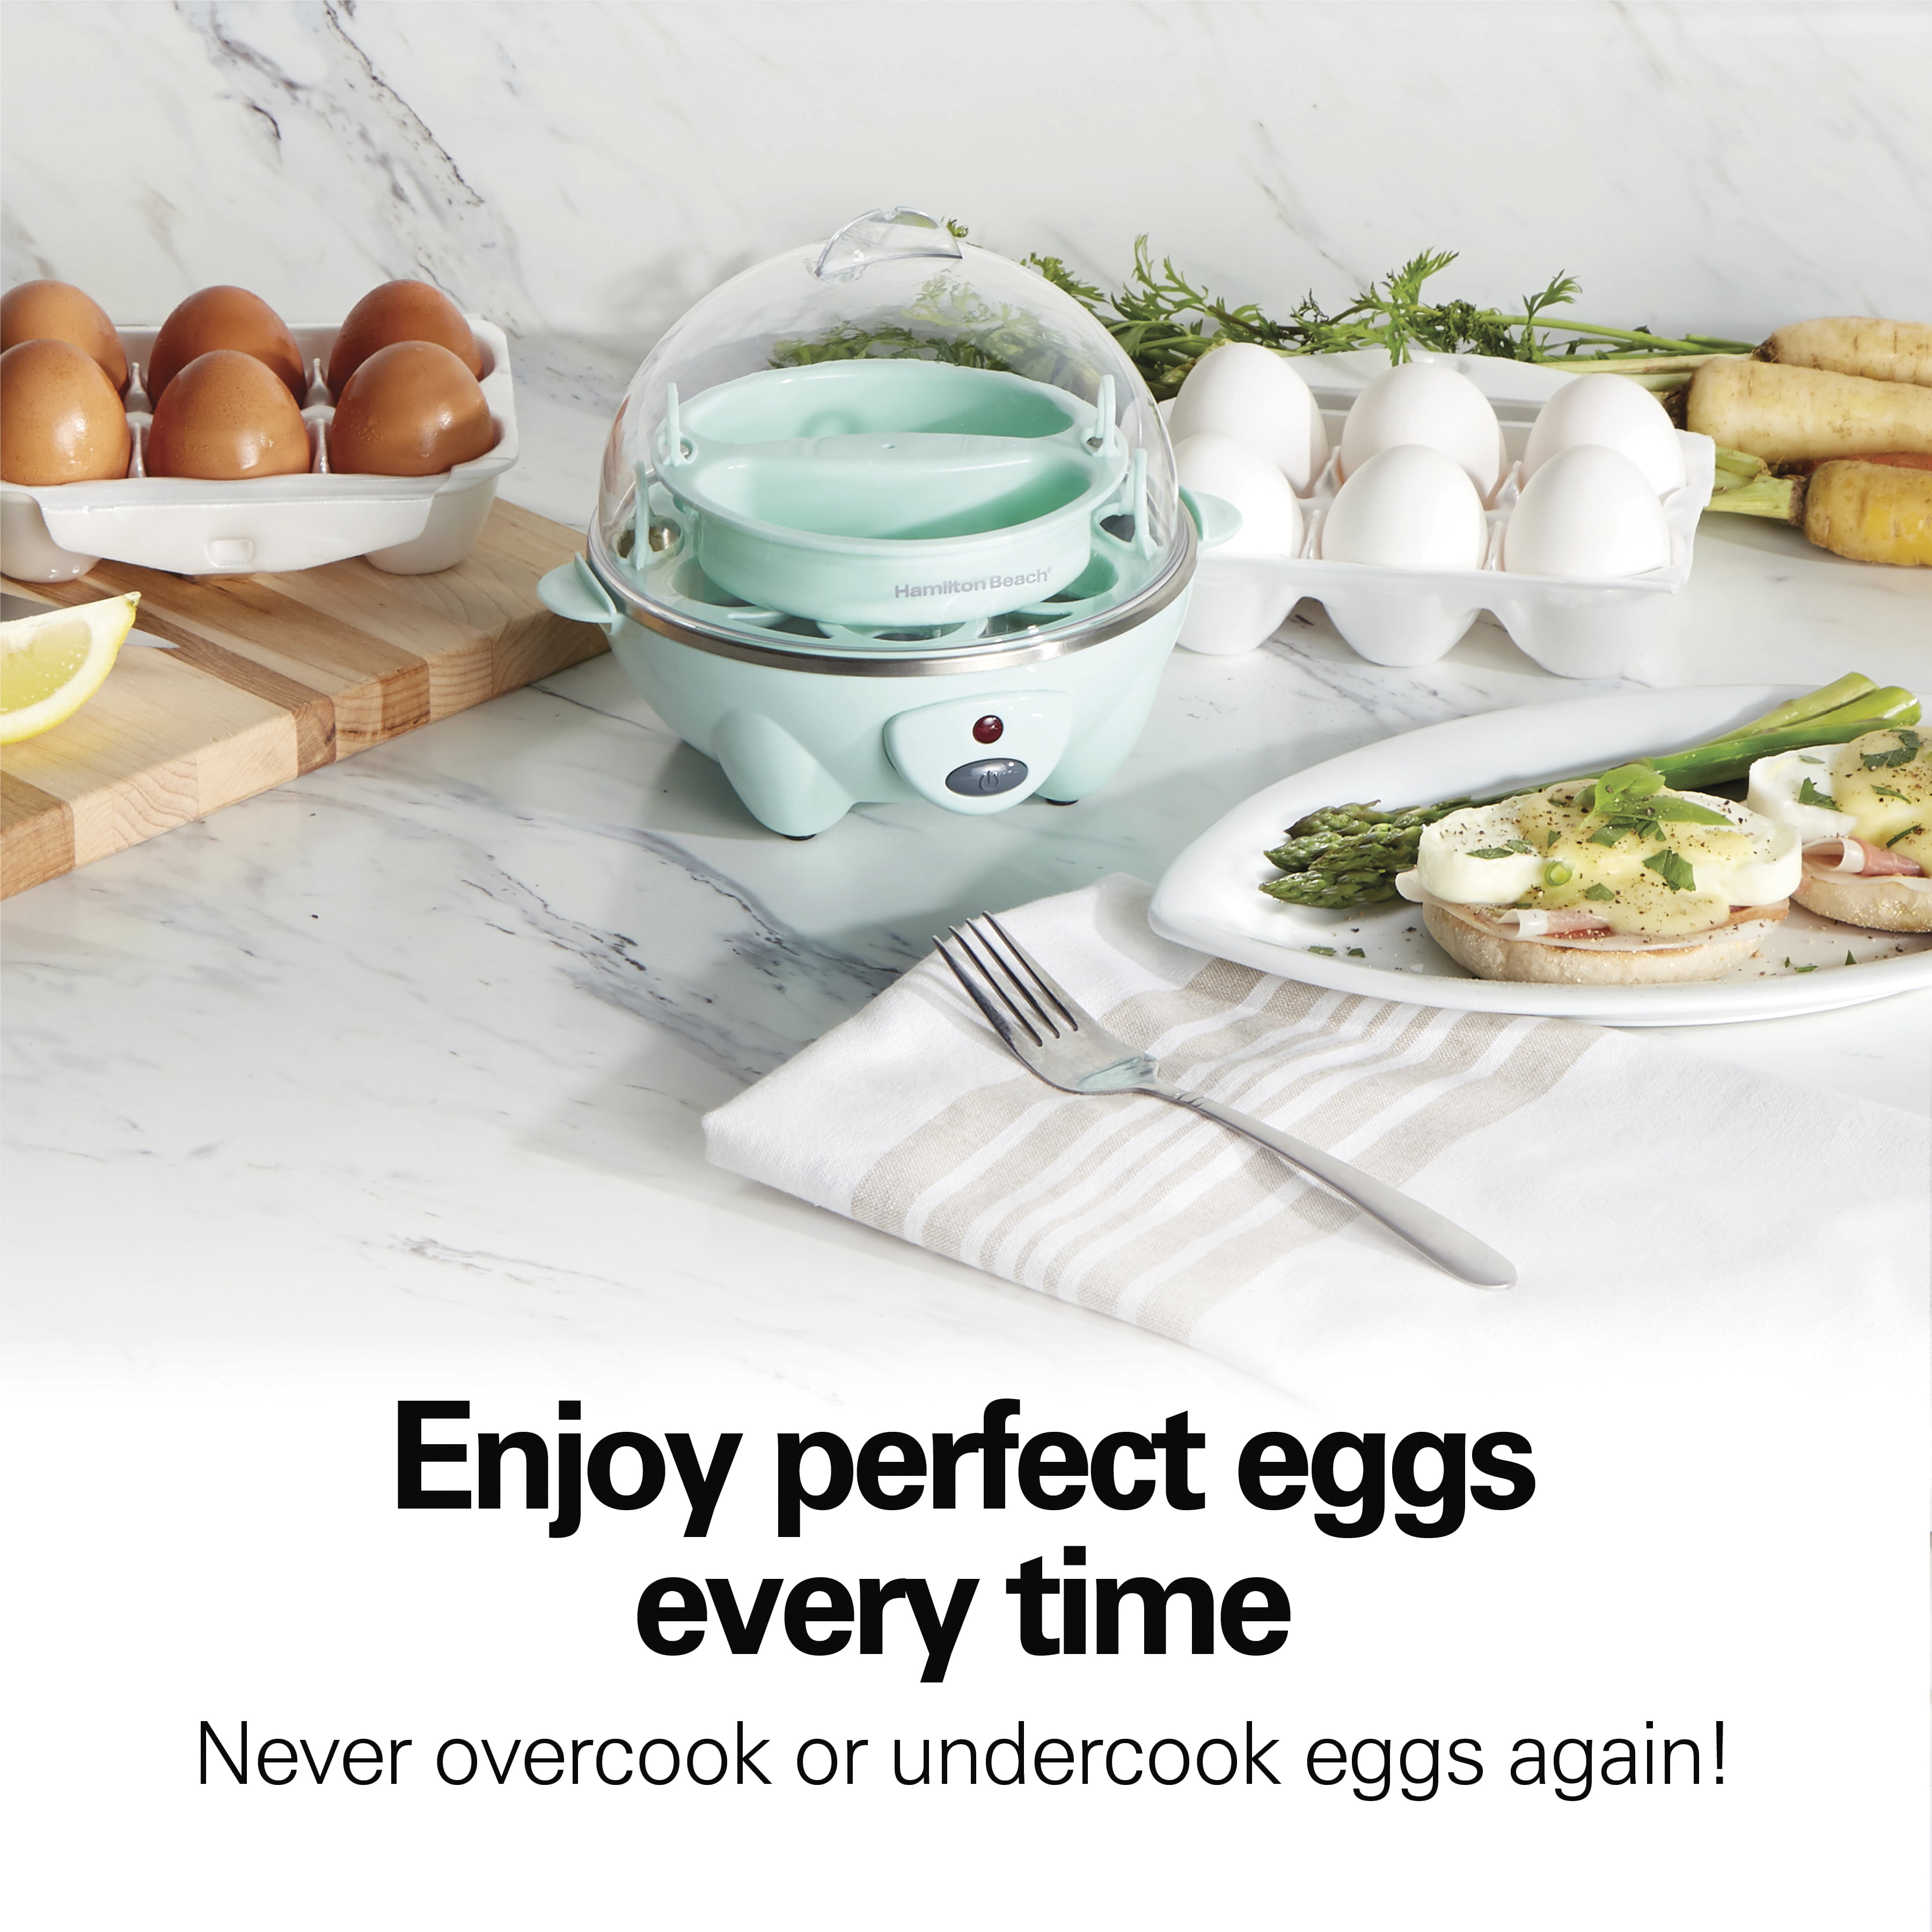 Hamilton Beach 25500 Egg Cooker with Built-In Timer, SleepyChef.com, everything breakfast!